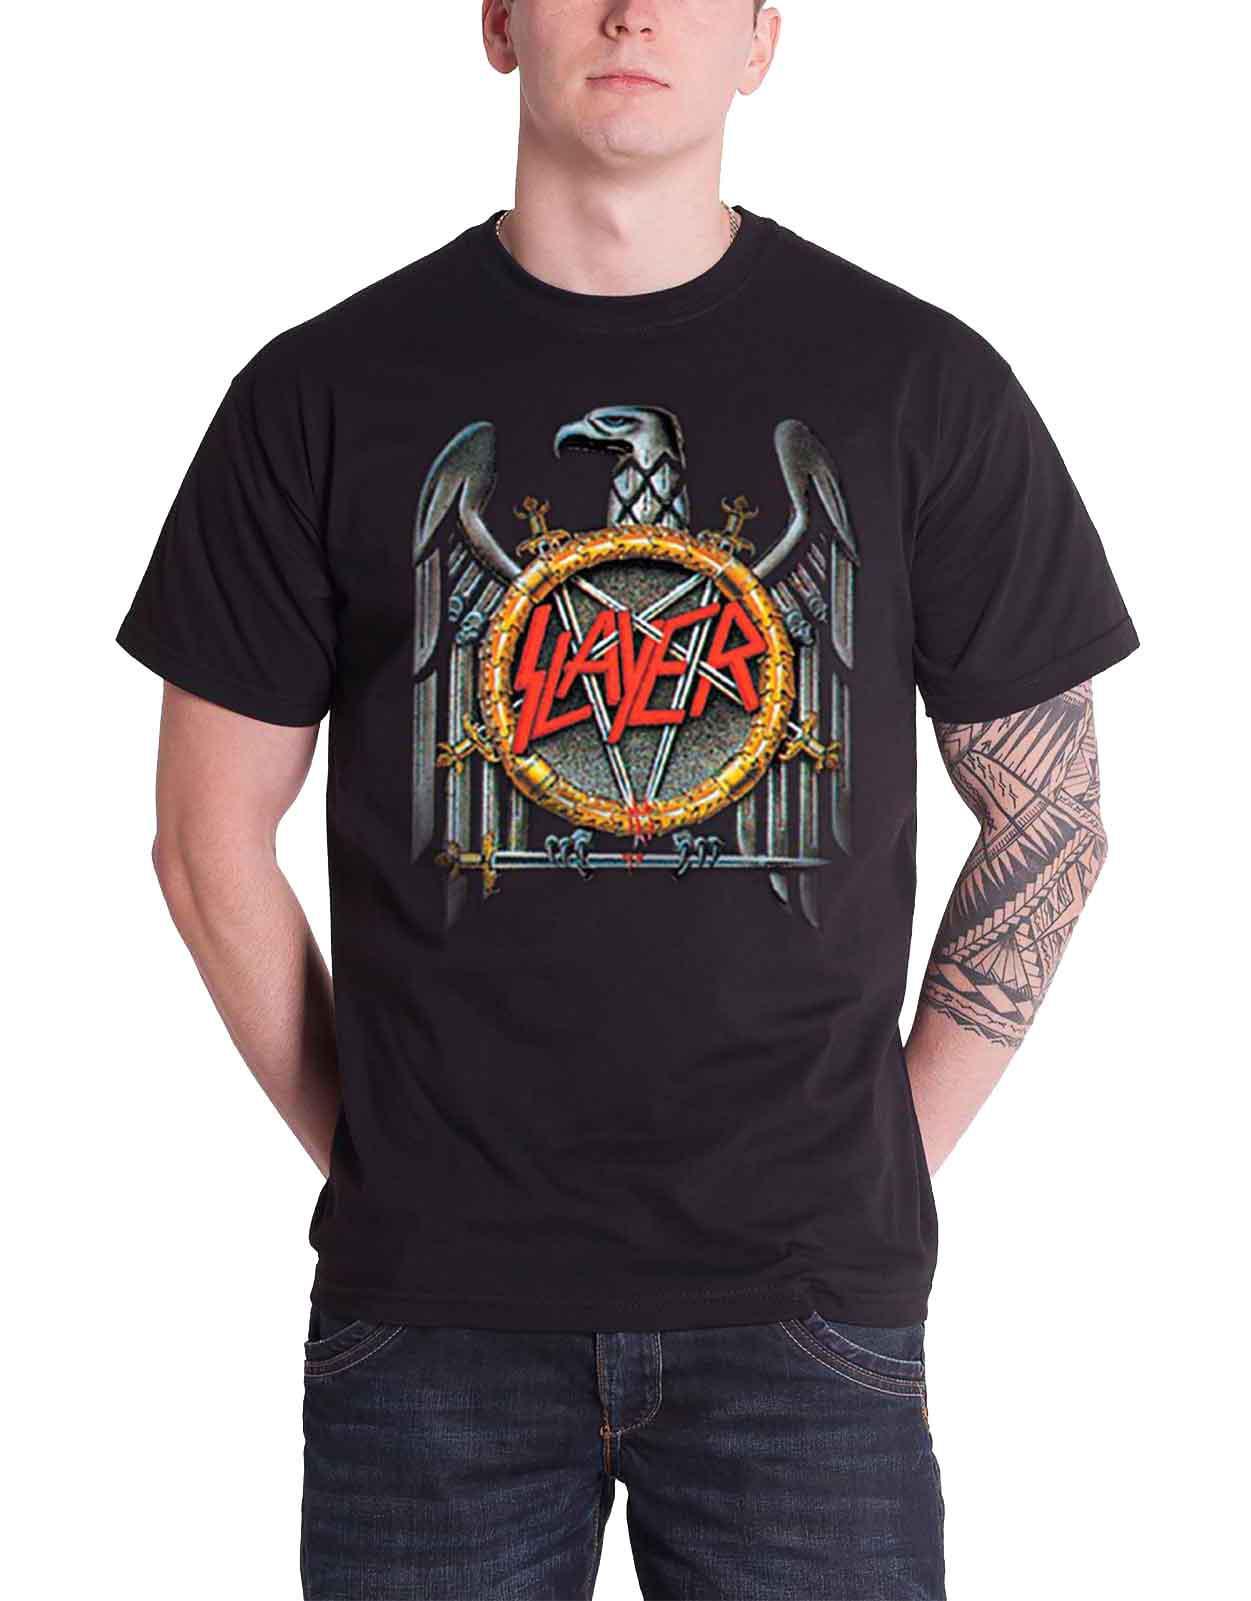 Slayer T Shirt band logo silver Eagle Crossed Swords new Black Mens Official